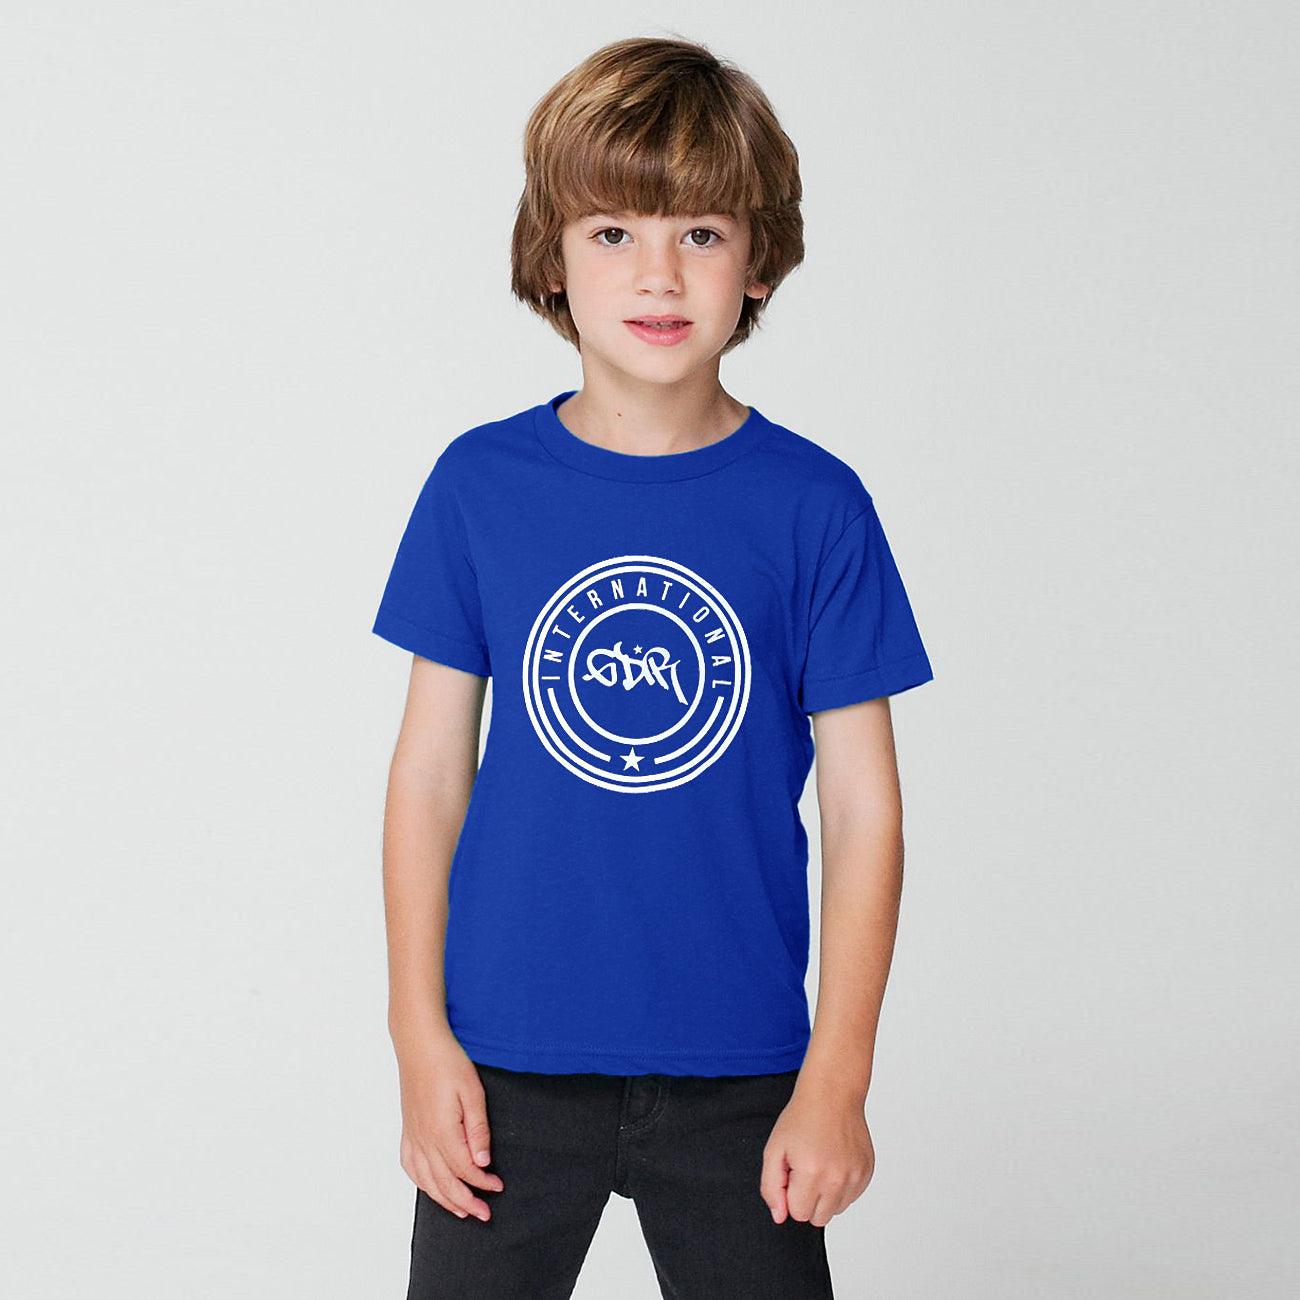 Blue Premium Quality Soft Cotton High Density Printed T-Shirt For Boys (GD-11190) - Brands River